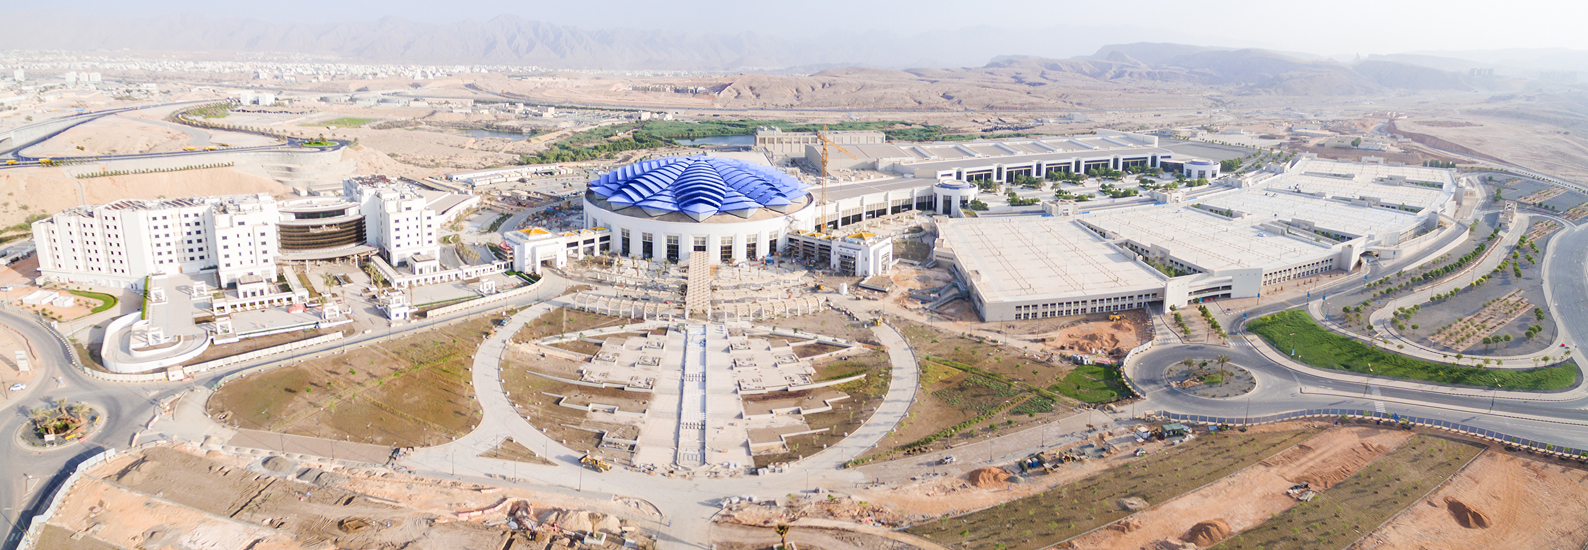 Oman Convention and Exhibition Centre celebrates second anniversary